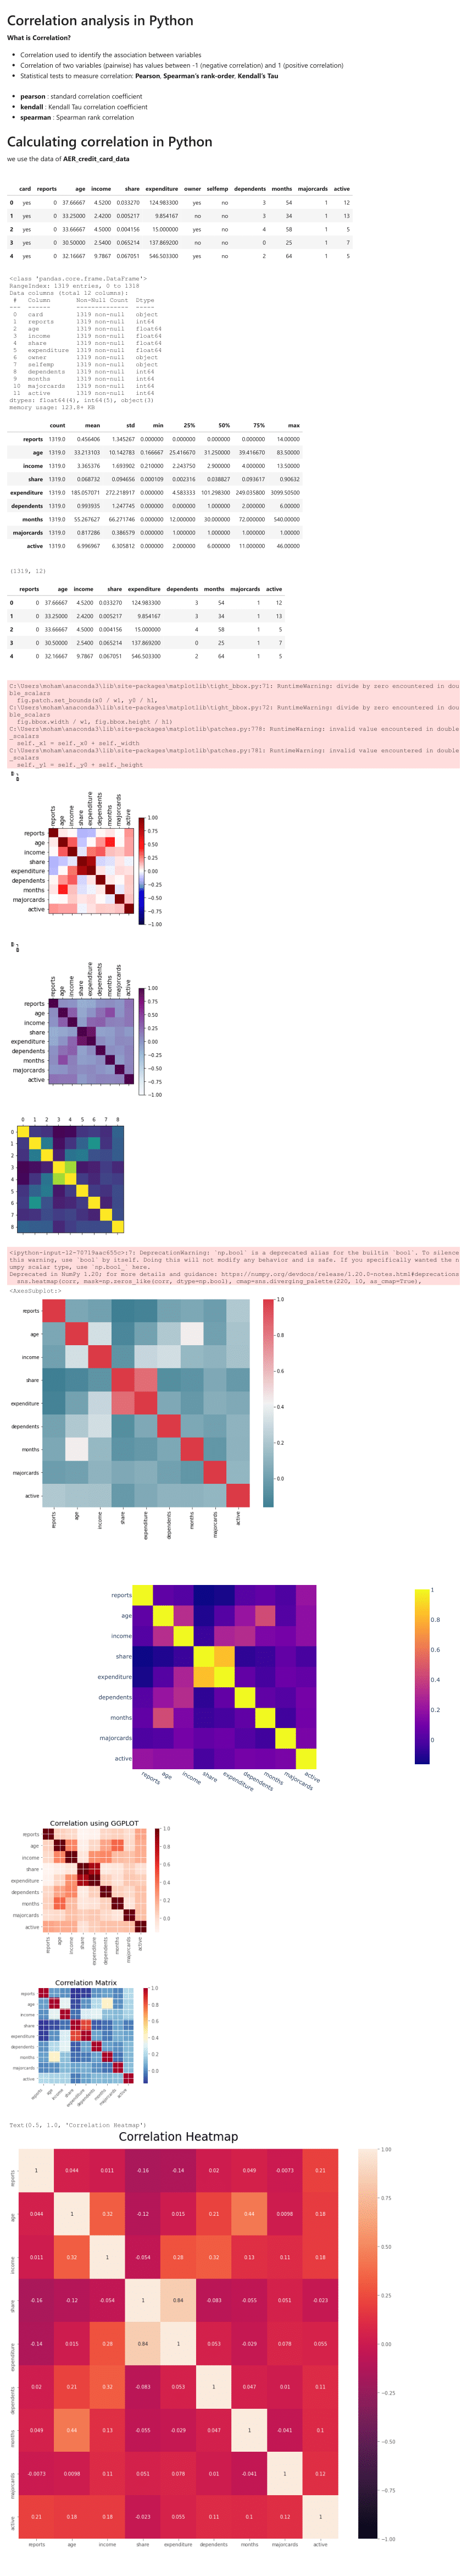 pdf-correlation-analysis-in-python